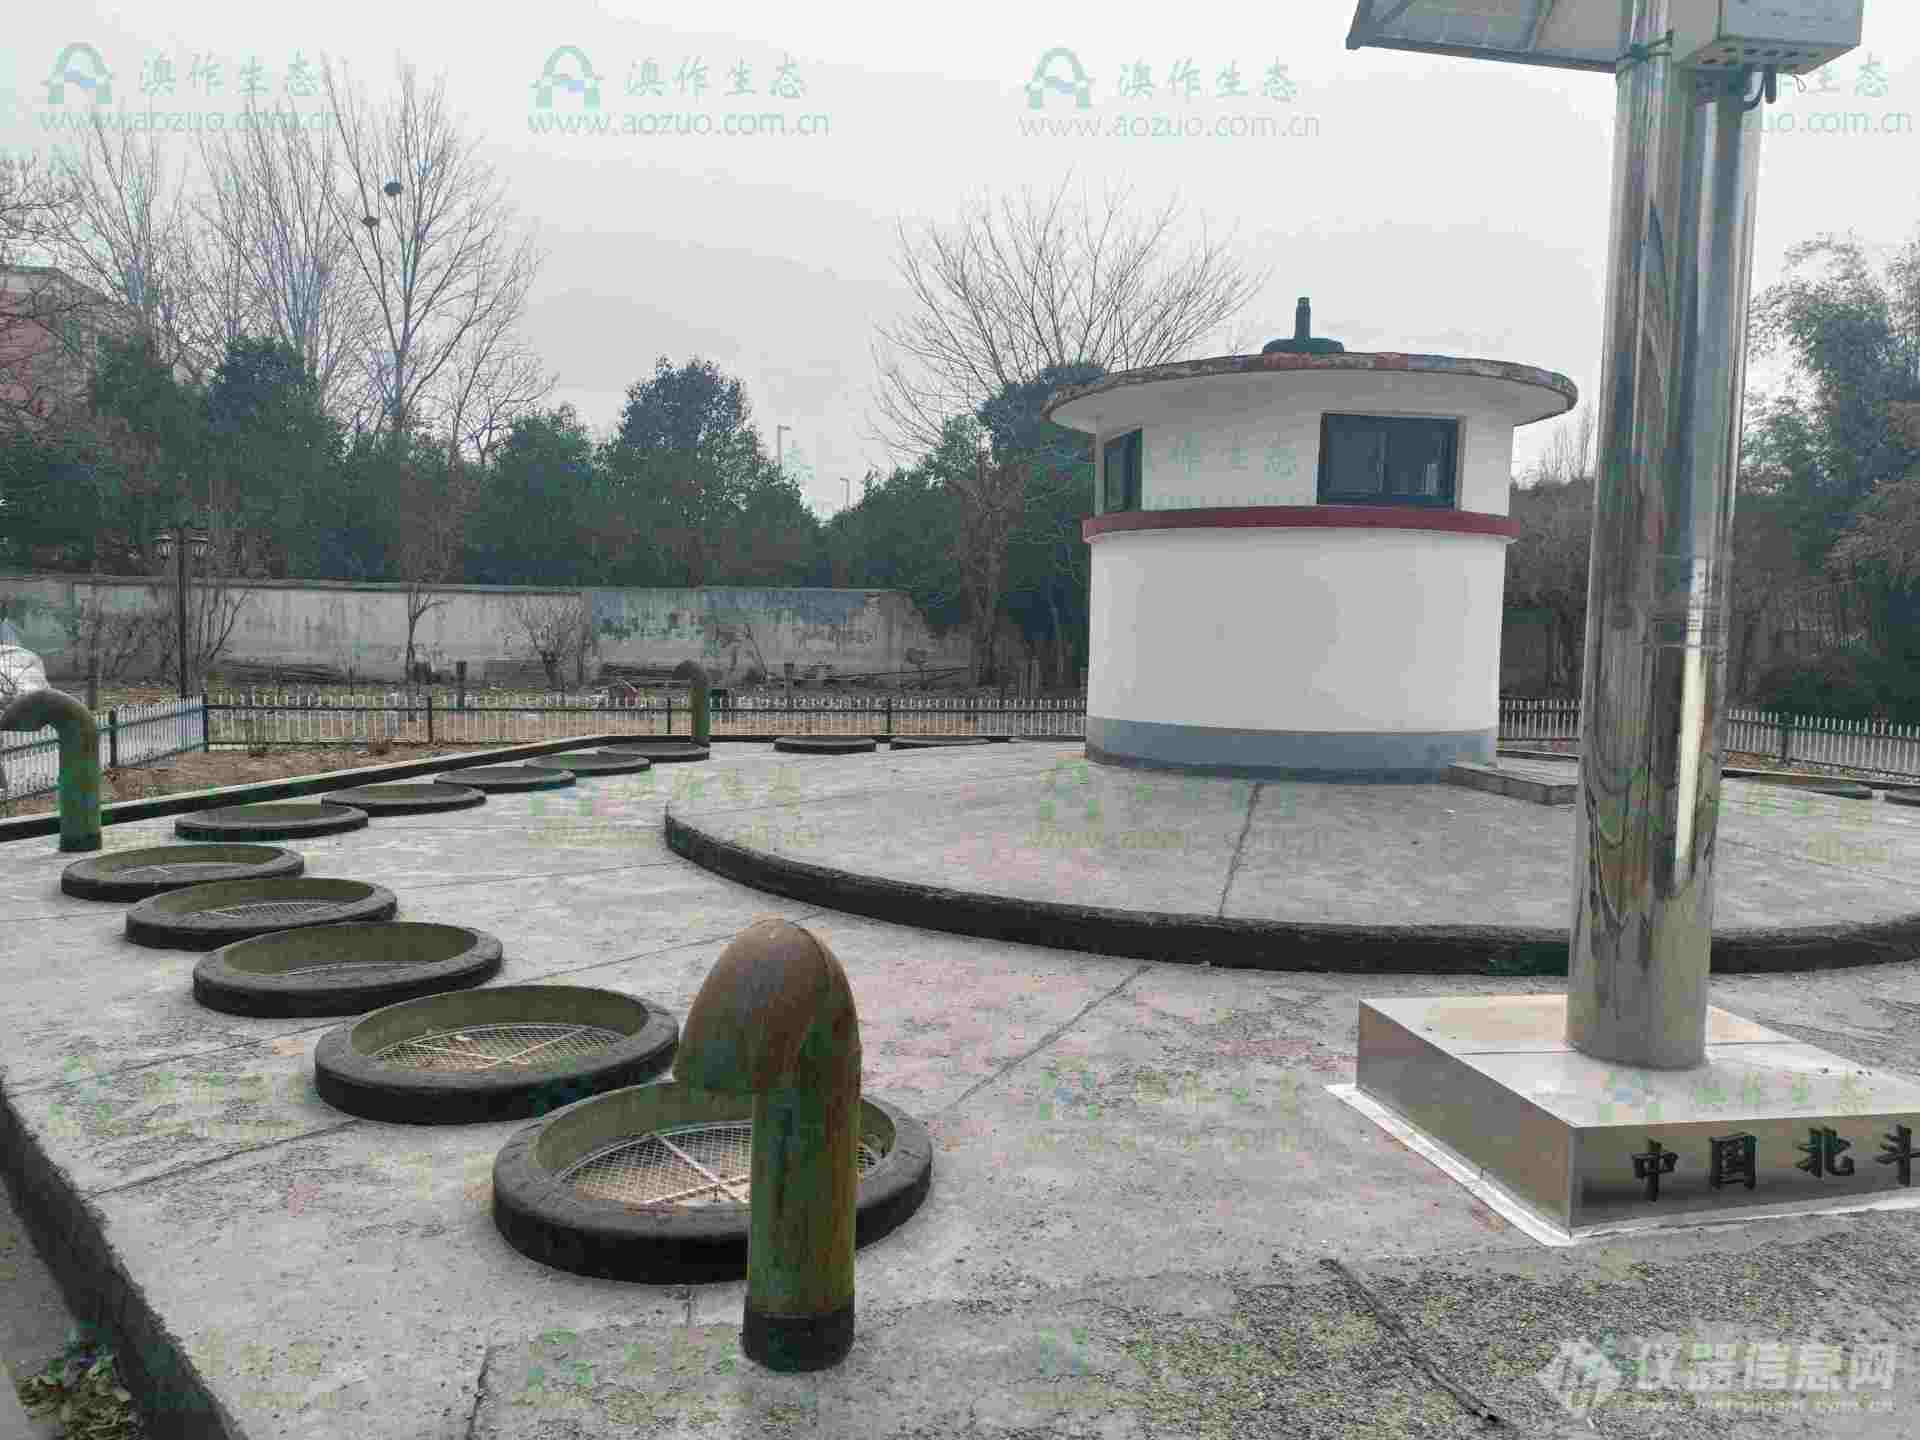 ENVILog-100土壤水分监测系统在河南省自然资源监测和国土整治院安装完成